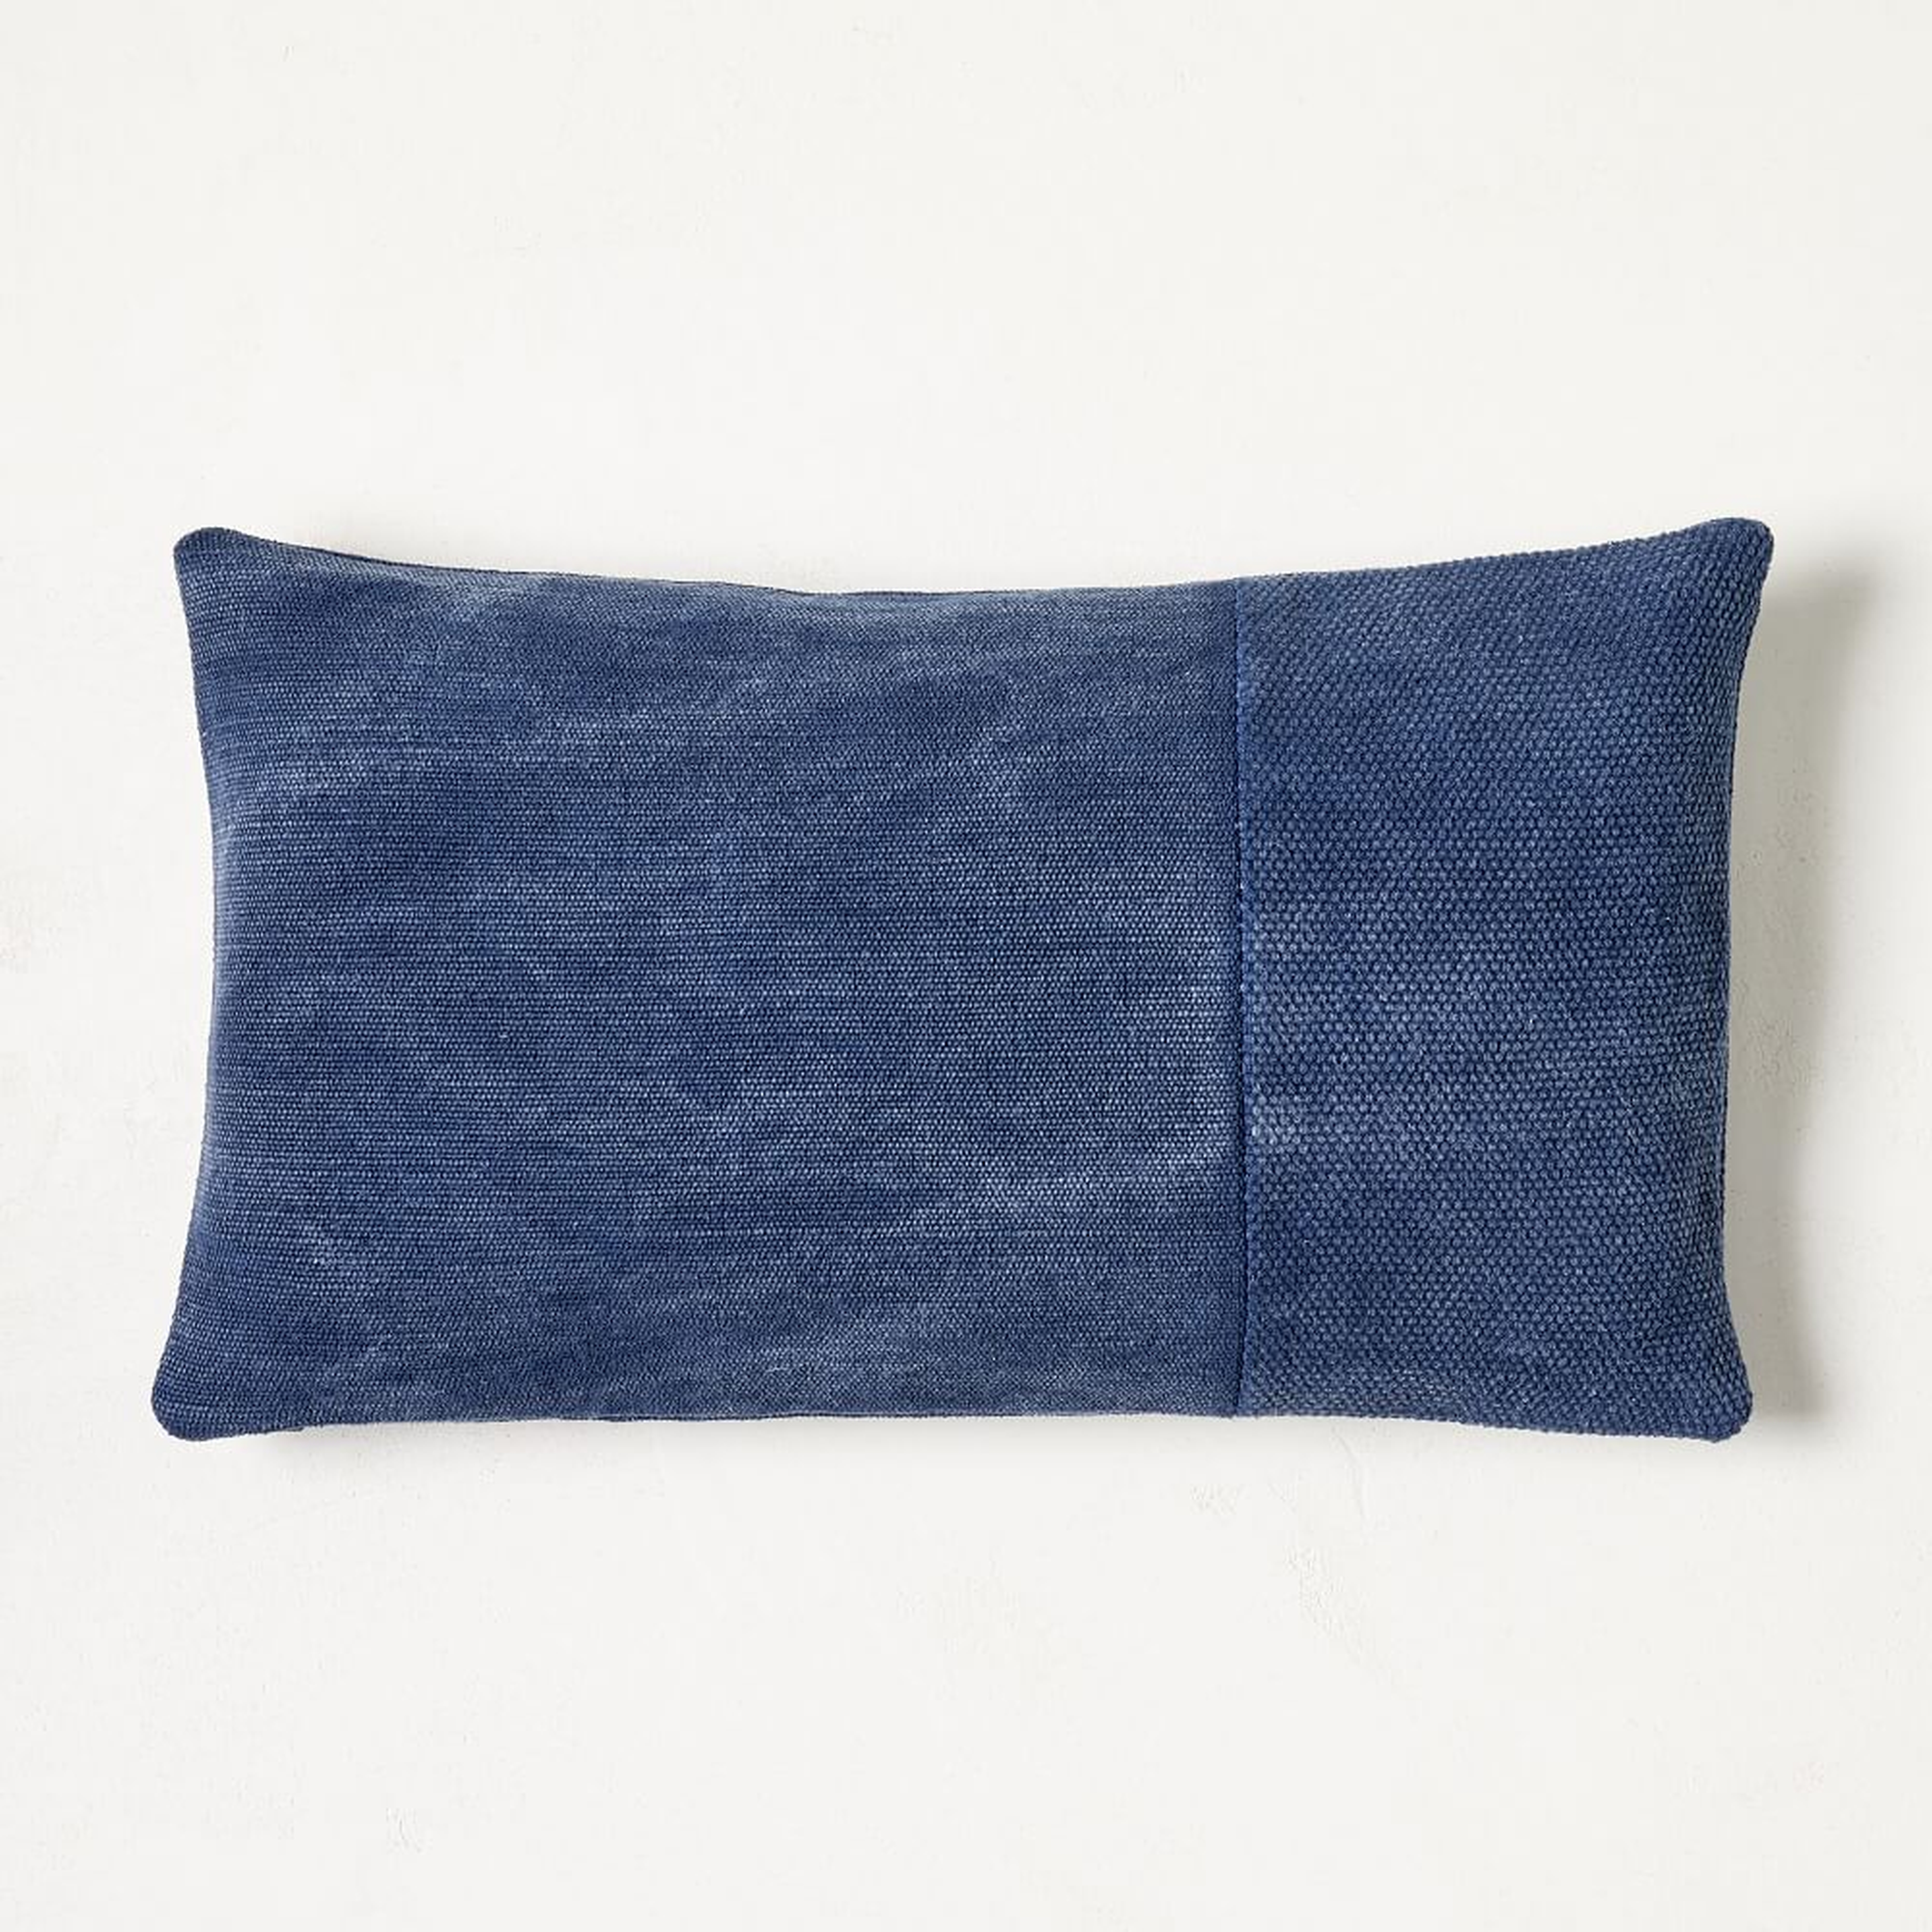 Cotton Canvas Pillow Cover, 12"x21", Midnight - West Elm